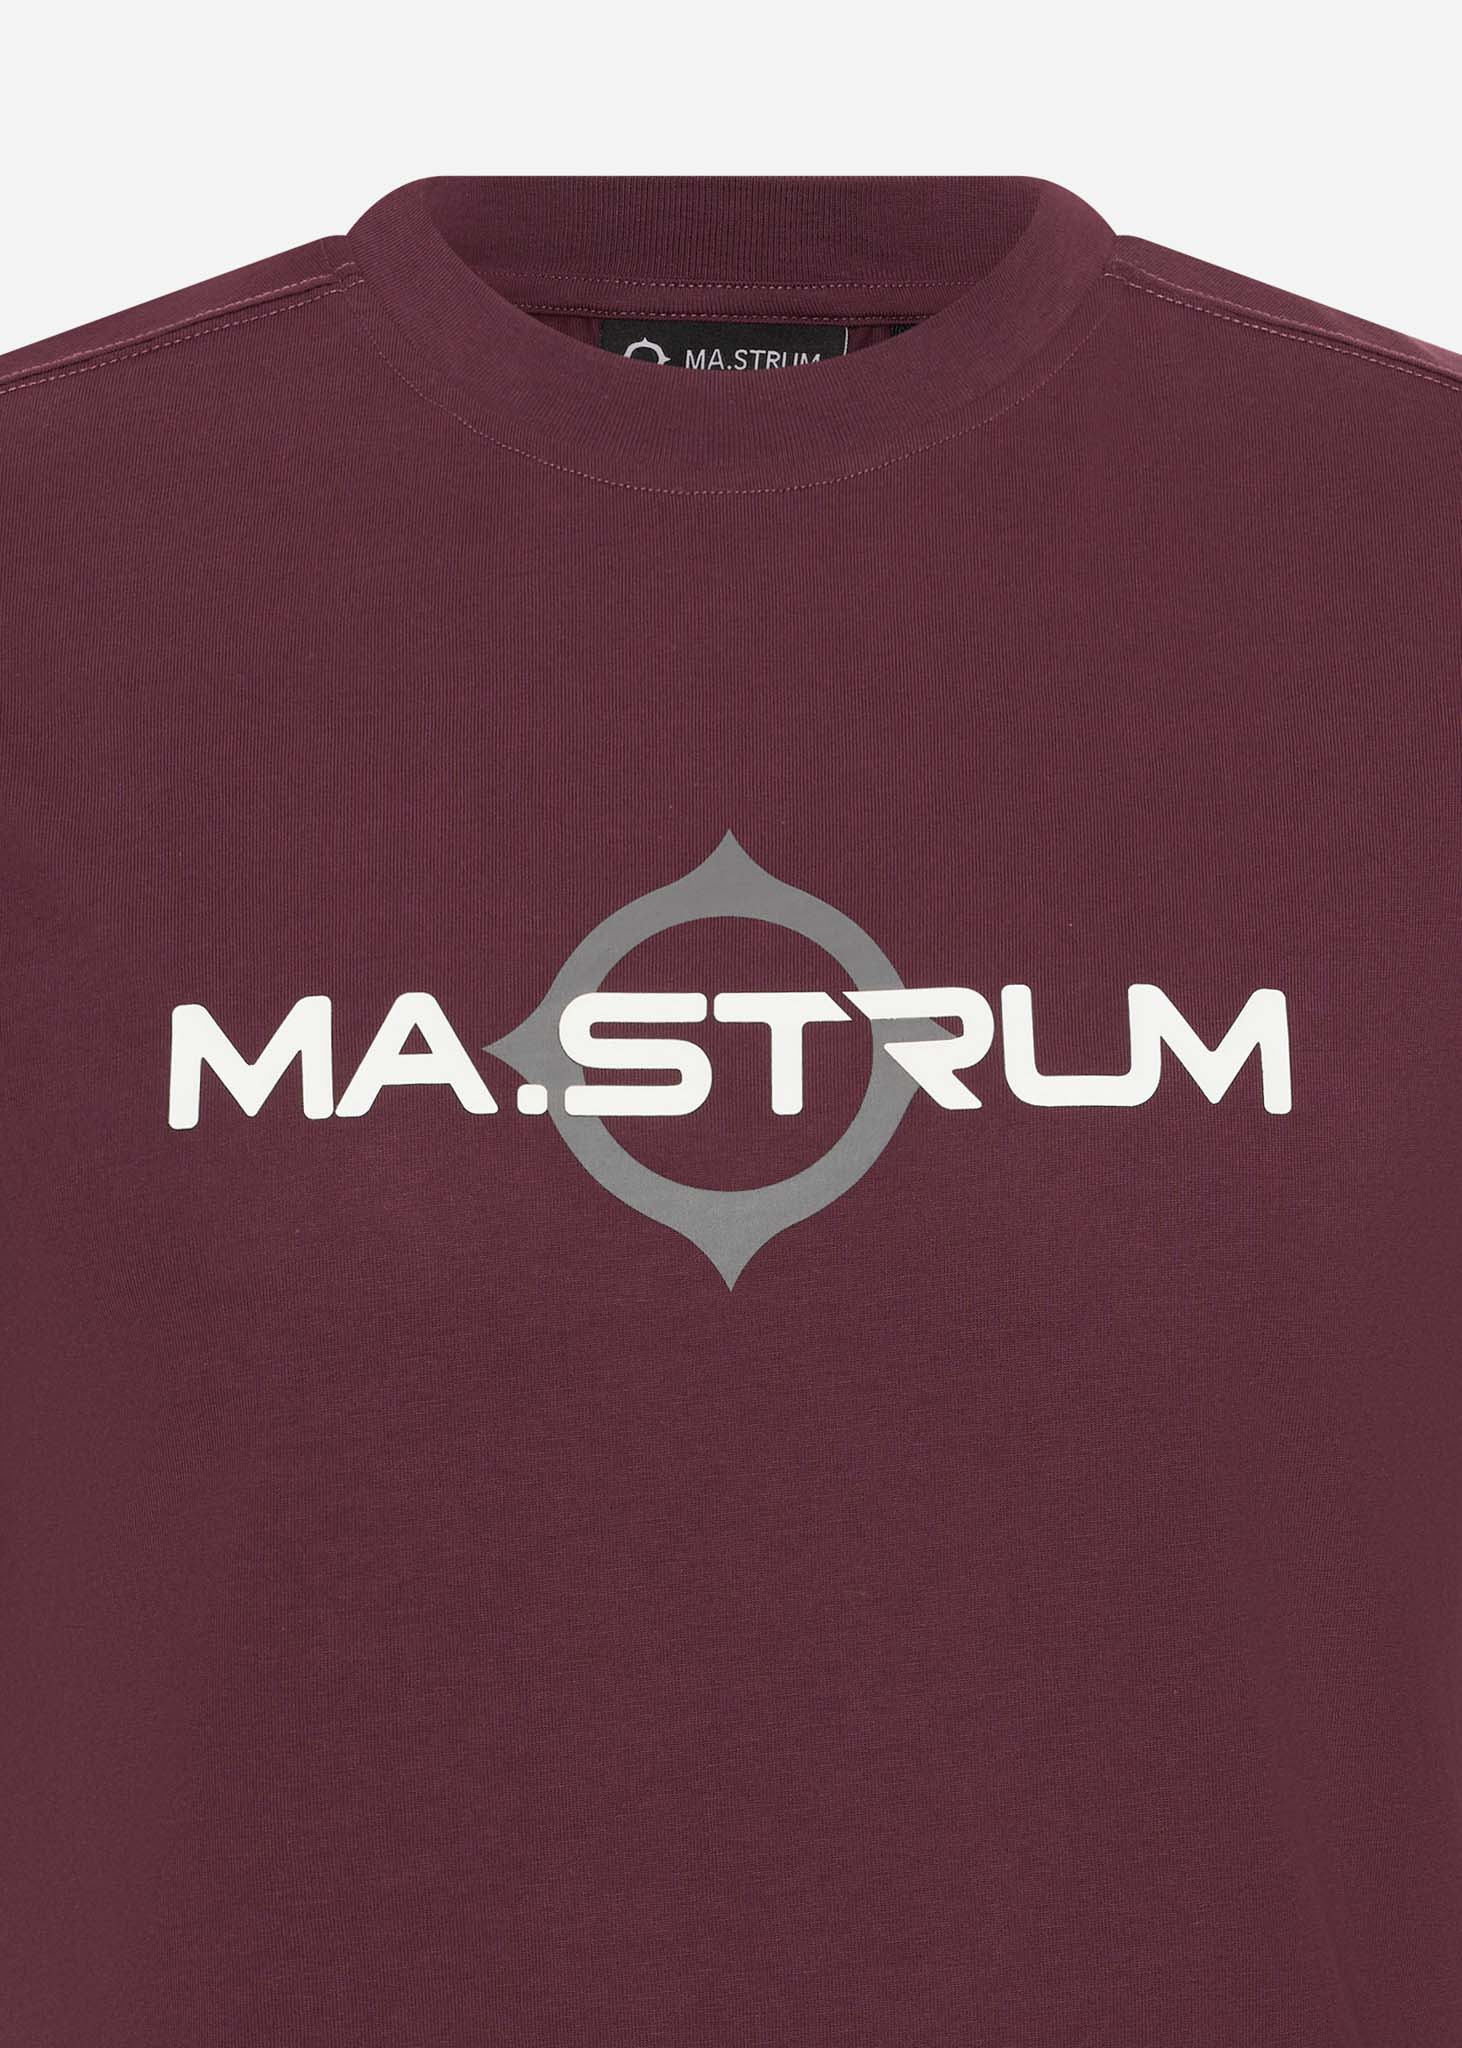 mastrum t-shirt burgundy red